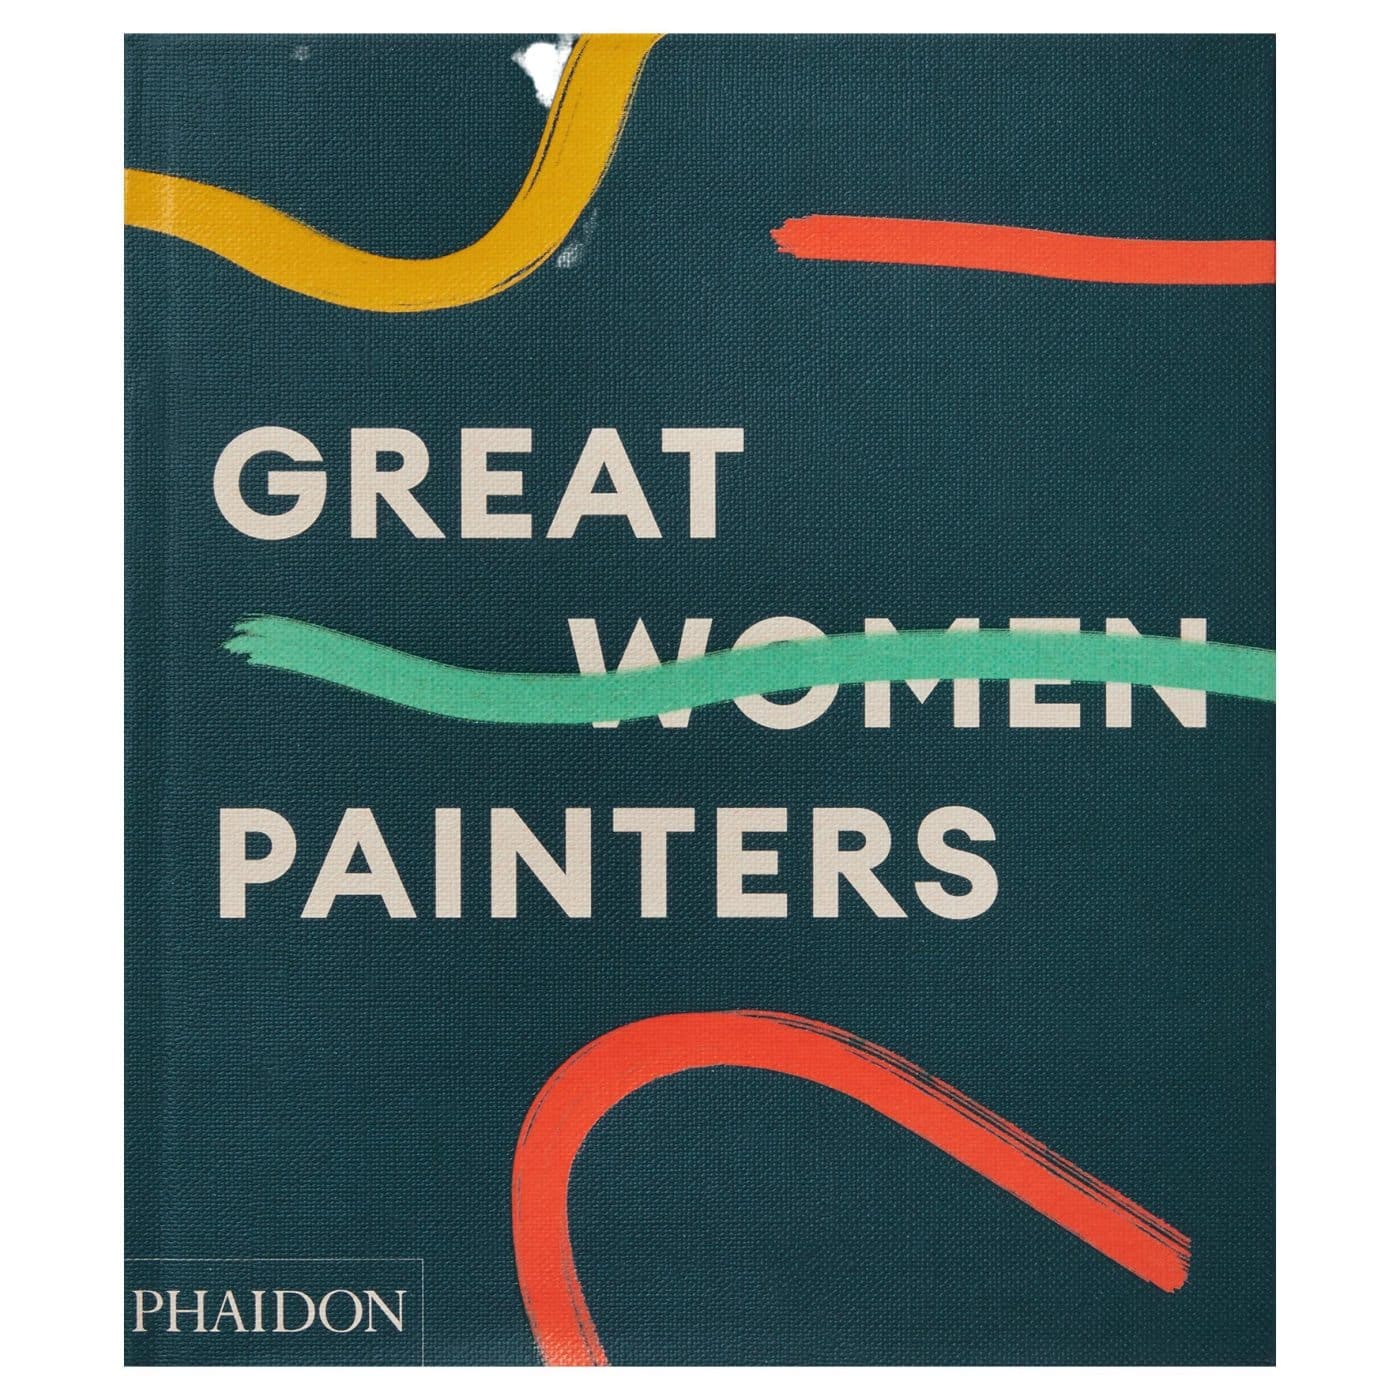 Great Women Painters Phaidon Allison Gingeras cover